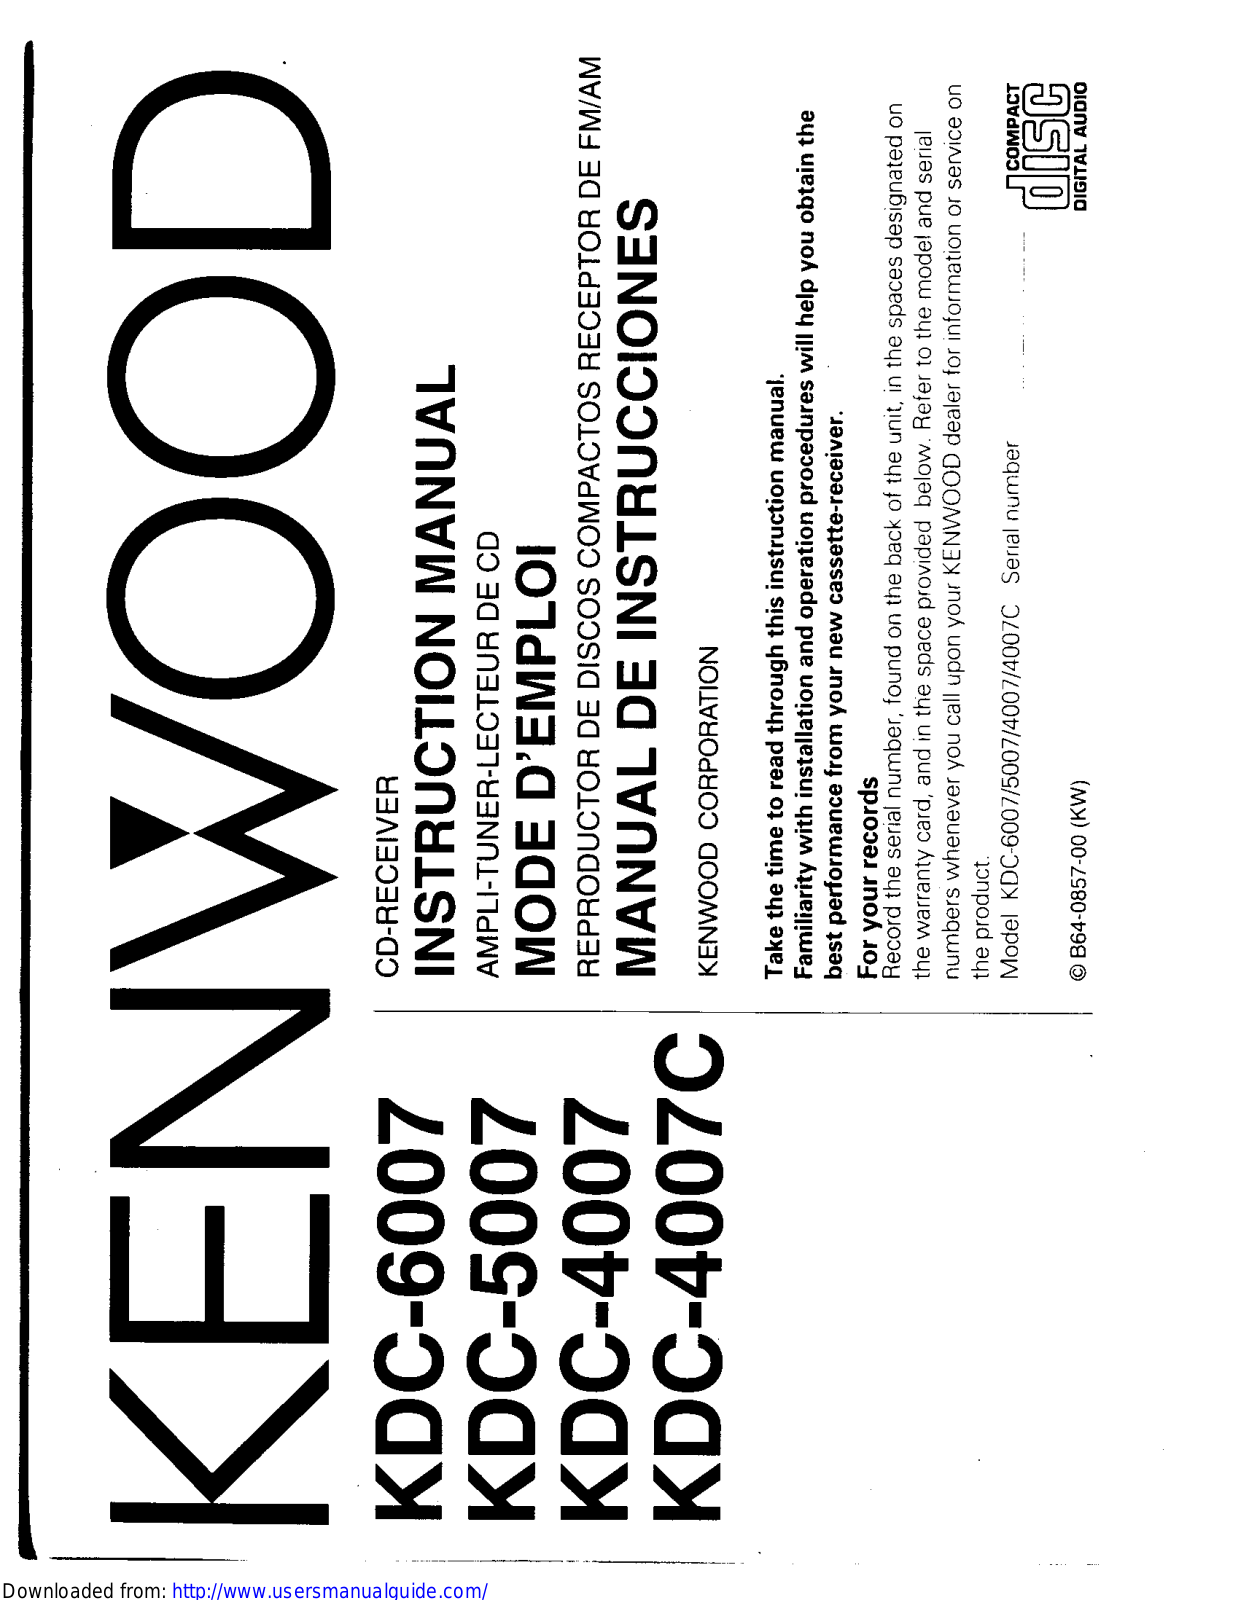 KENWOOD KDC-6007, KDC-5007, KDC-4007CP, KDC-4007C, KDC-4007 User Manual